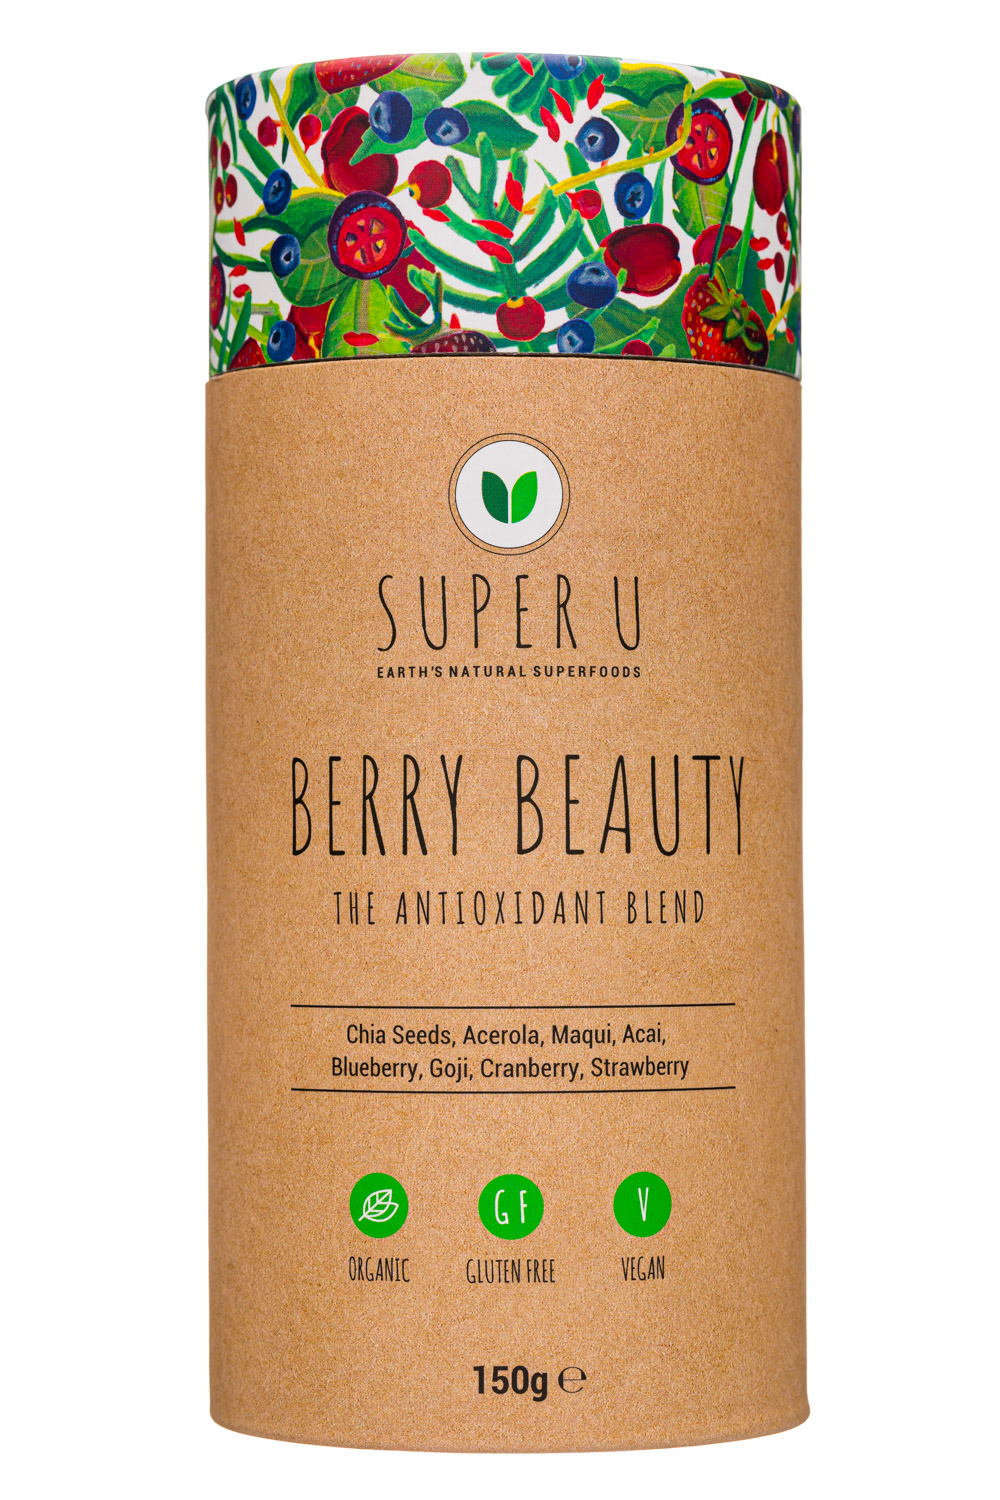 Berry Beauty - The antioxidant Blend